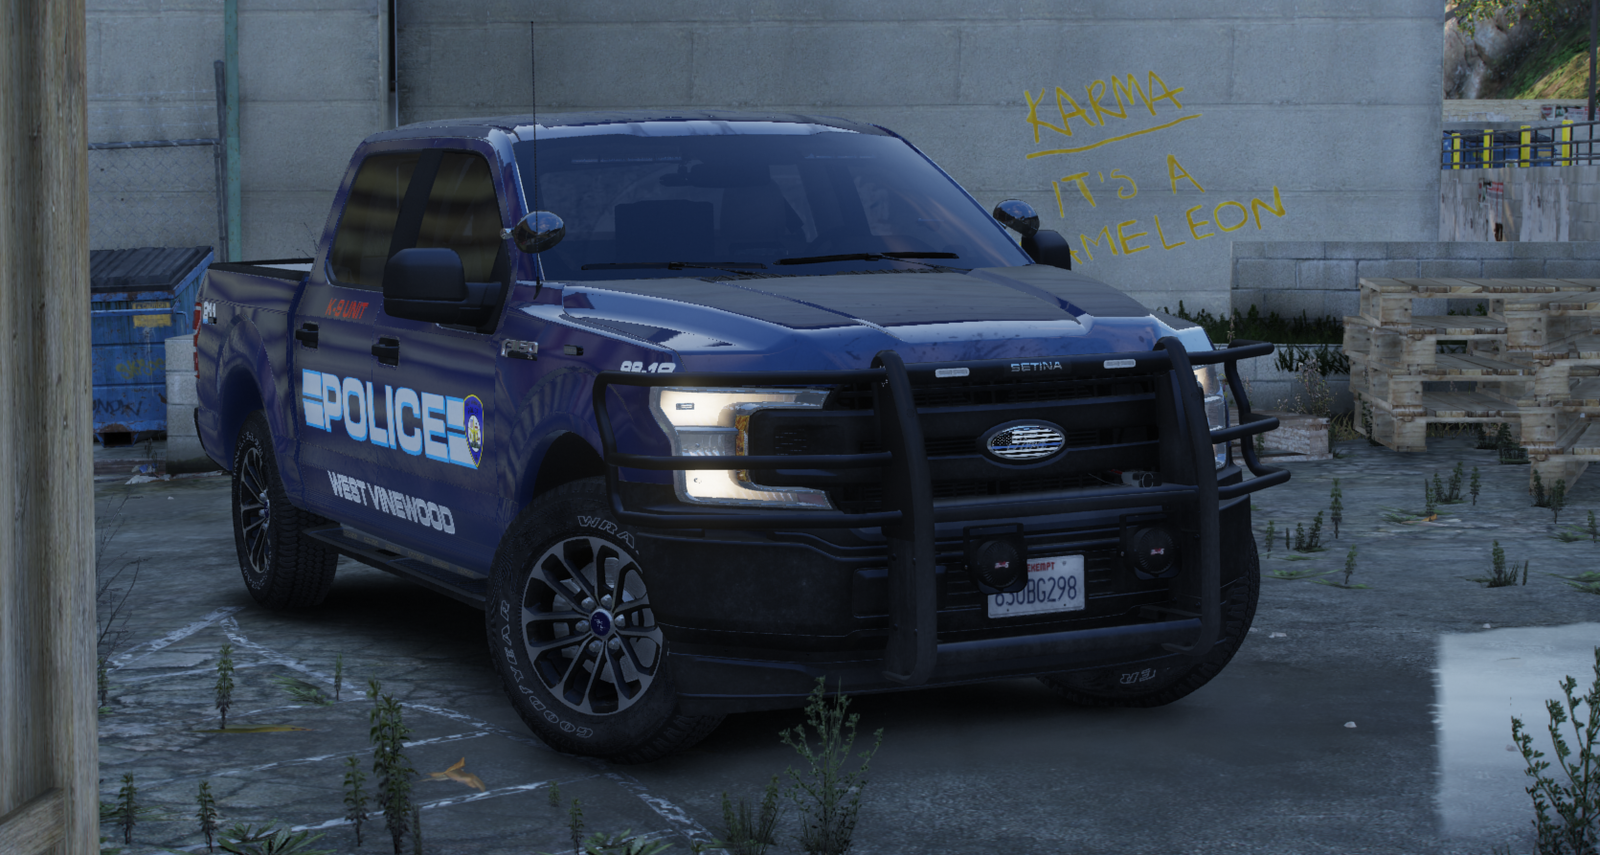 West Vinewood Police Department K9 Unit - Ford F-150 - GTA V Galleries ...